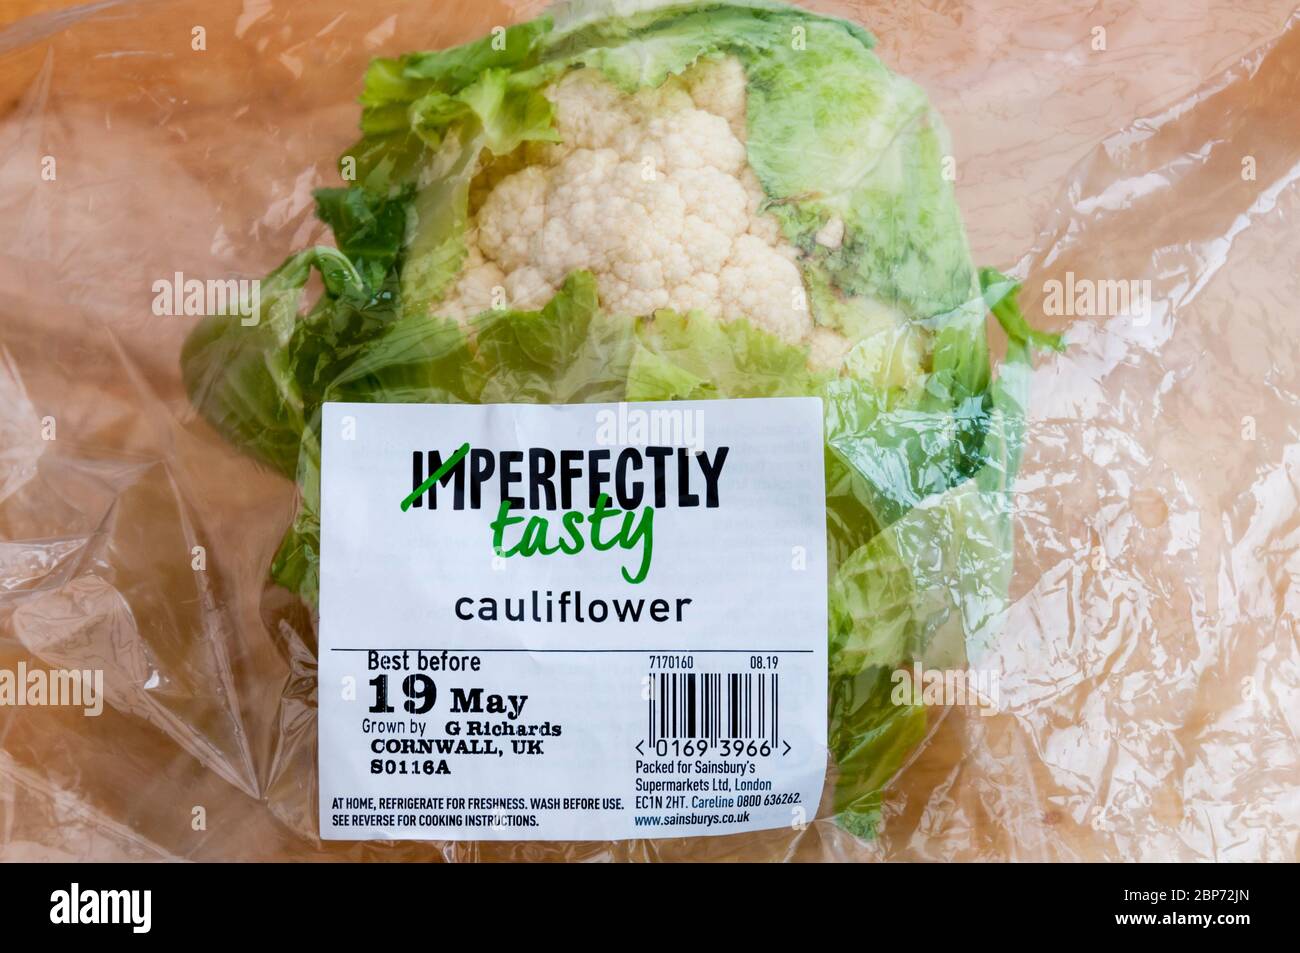 A Sainsbury's Imperfectly Tasty cauliflower. Stock Photo